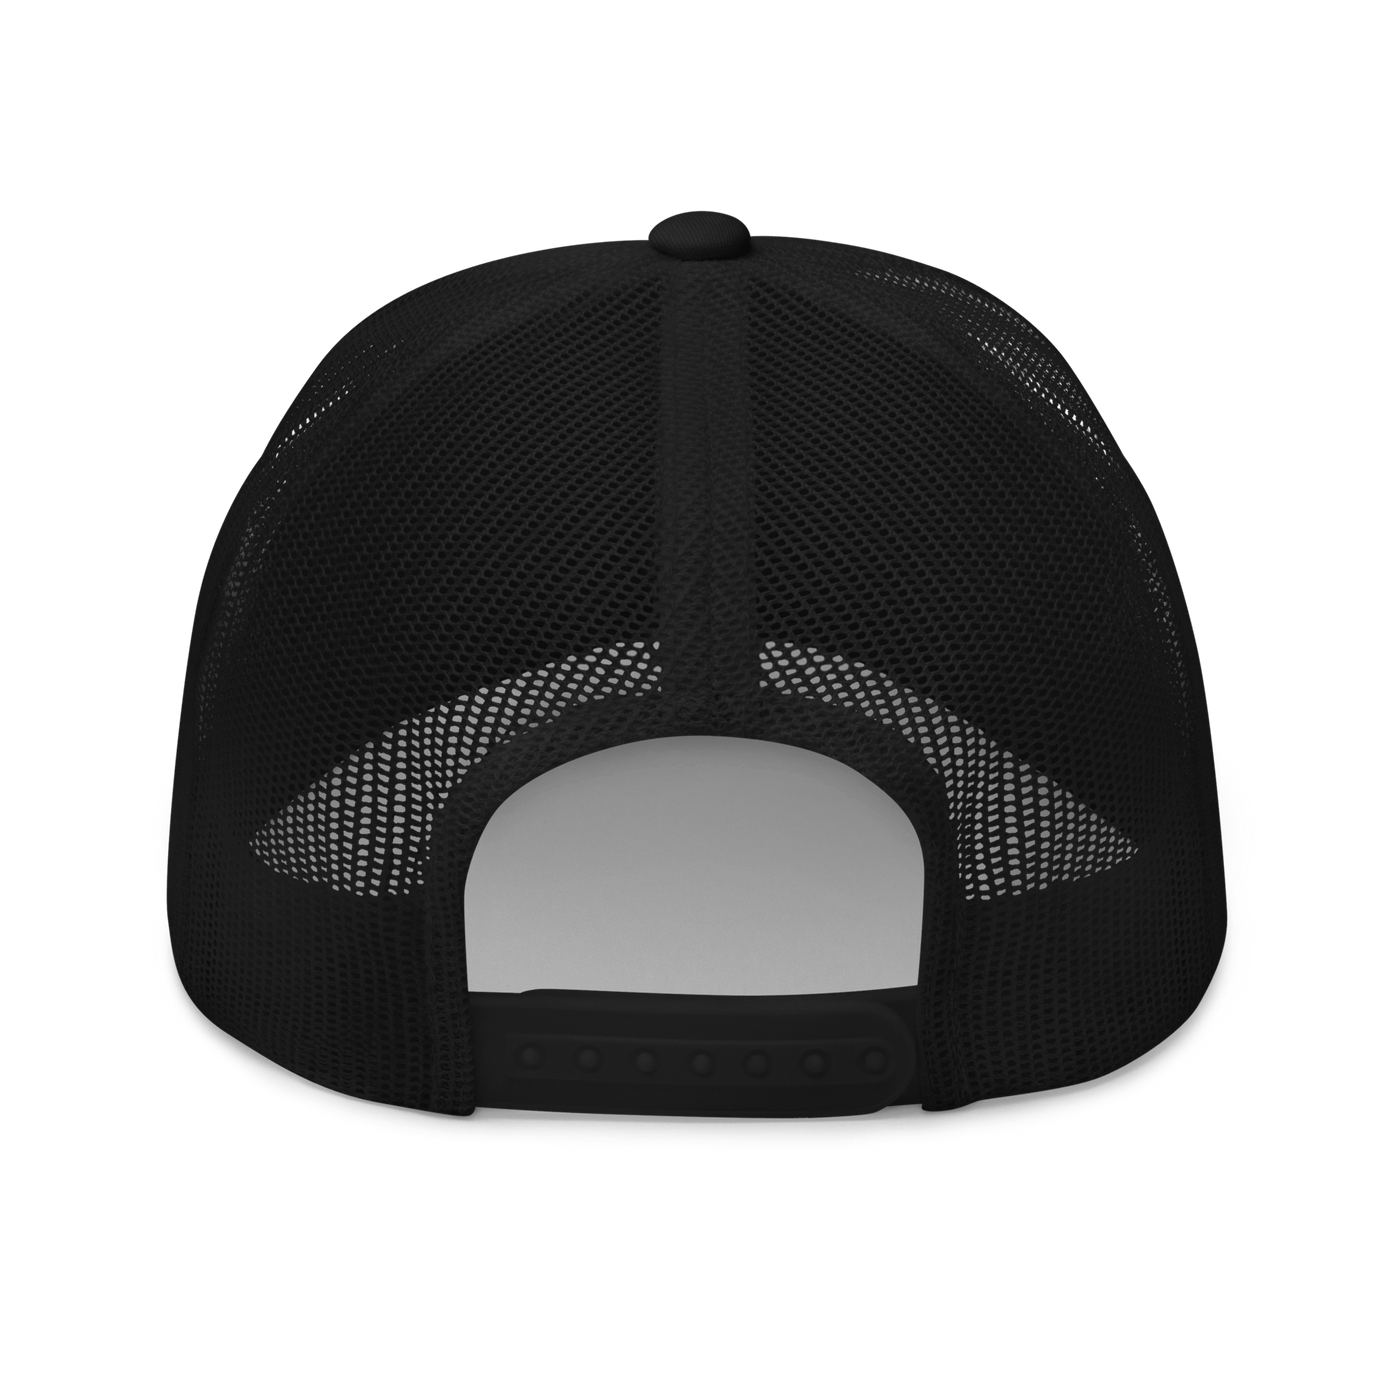 99 problems Trucker Cap - Black - - Just Another Cap Store